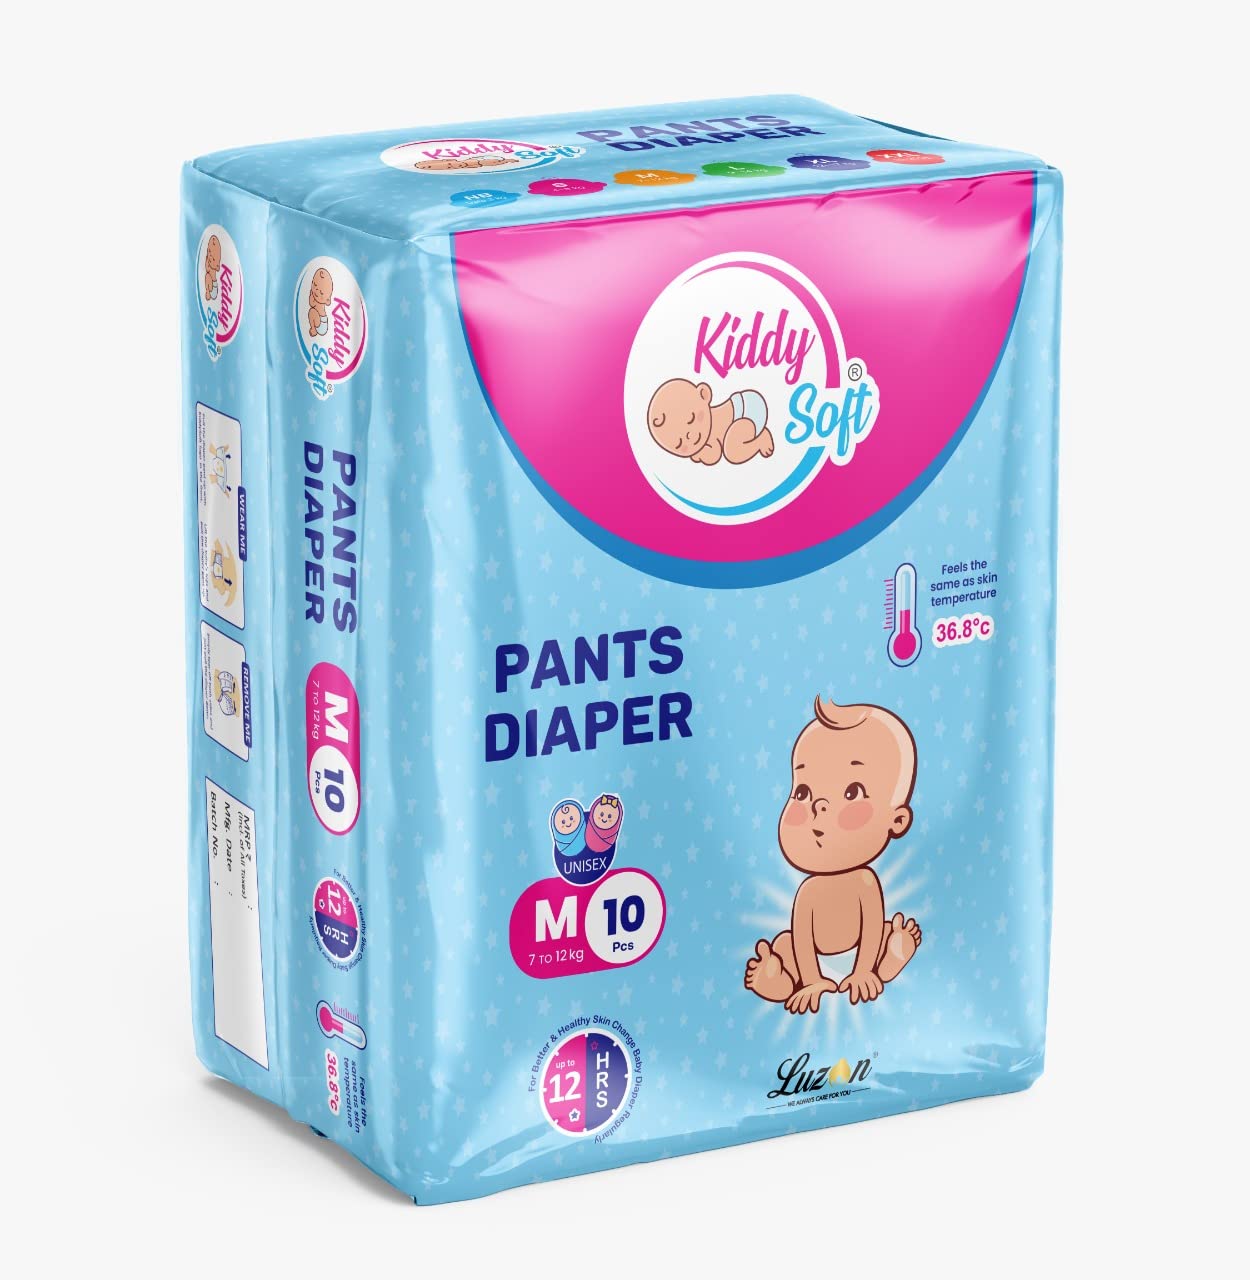 Kiddy Soft M 10 Pants